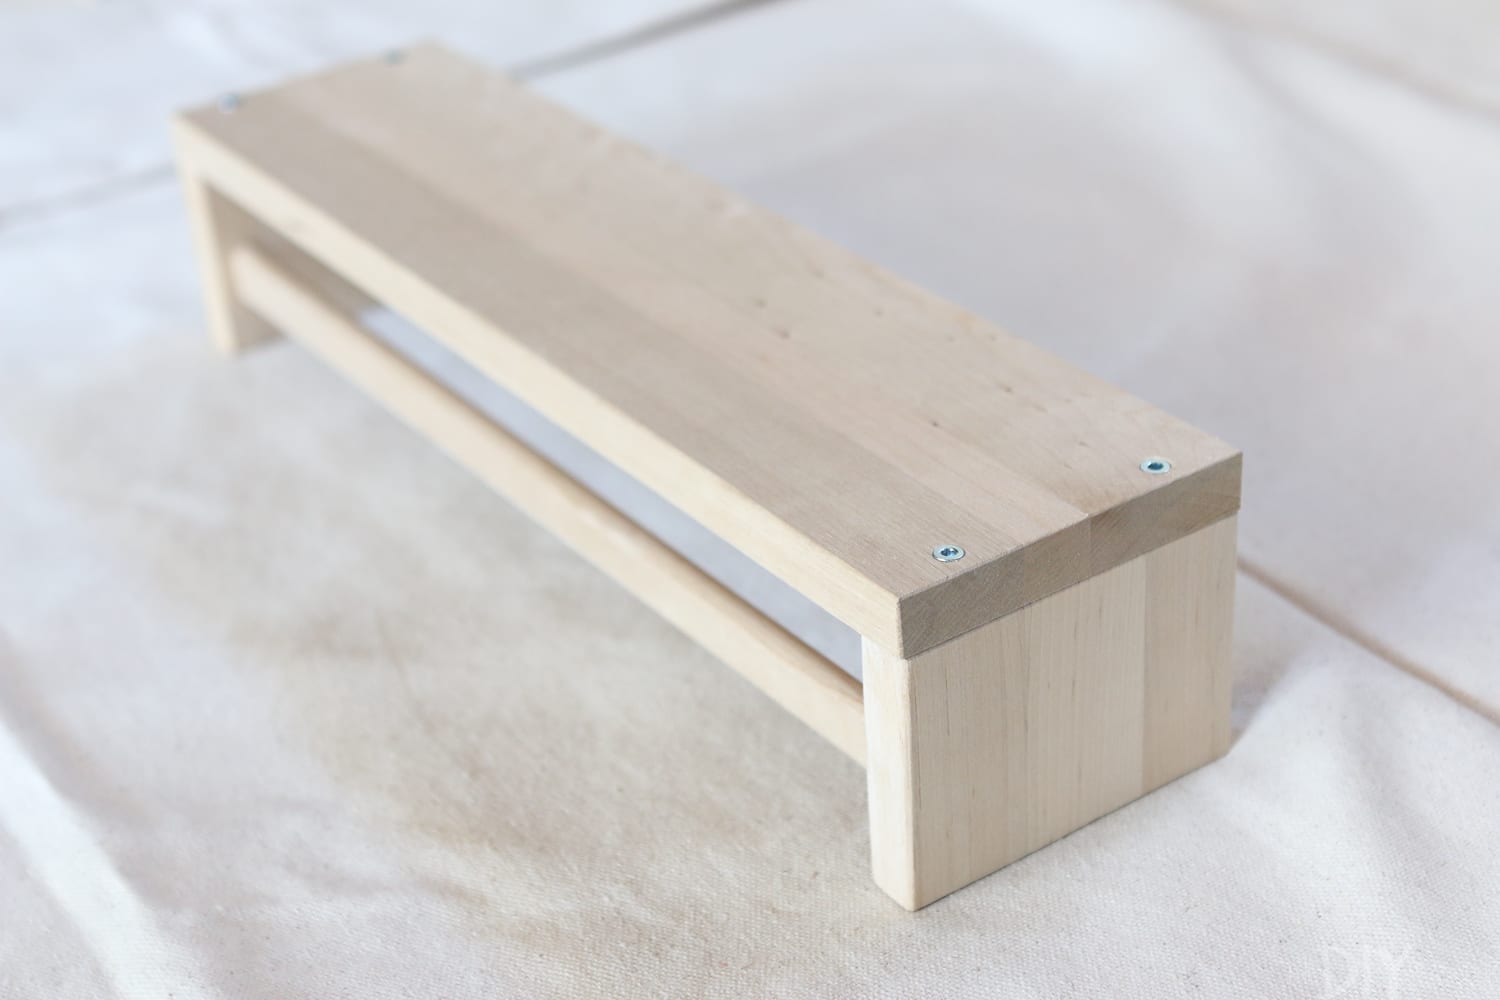 An IKEA shelf is an easy way to do this:  DIY Bookshelves | DIY Playbook